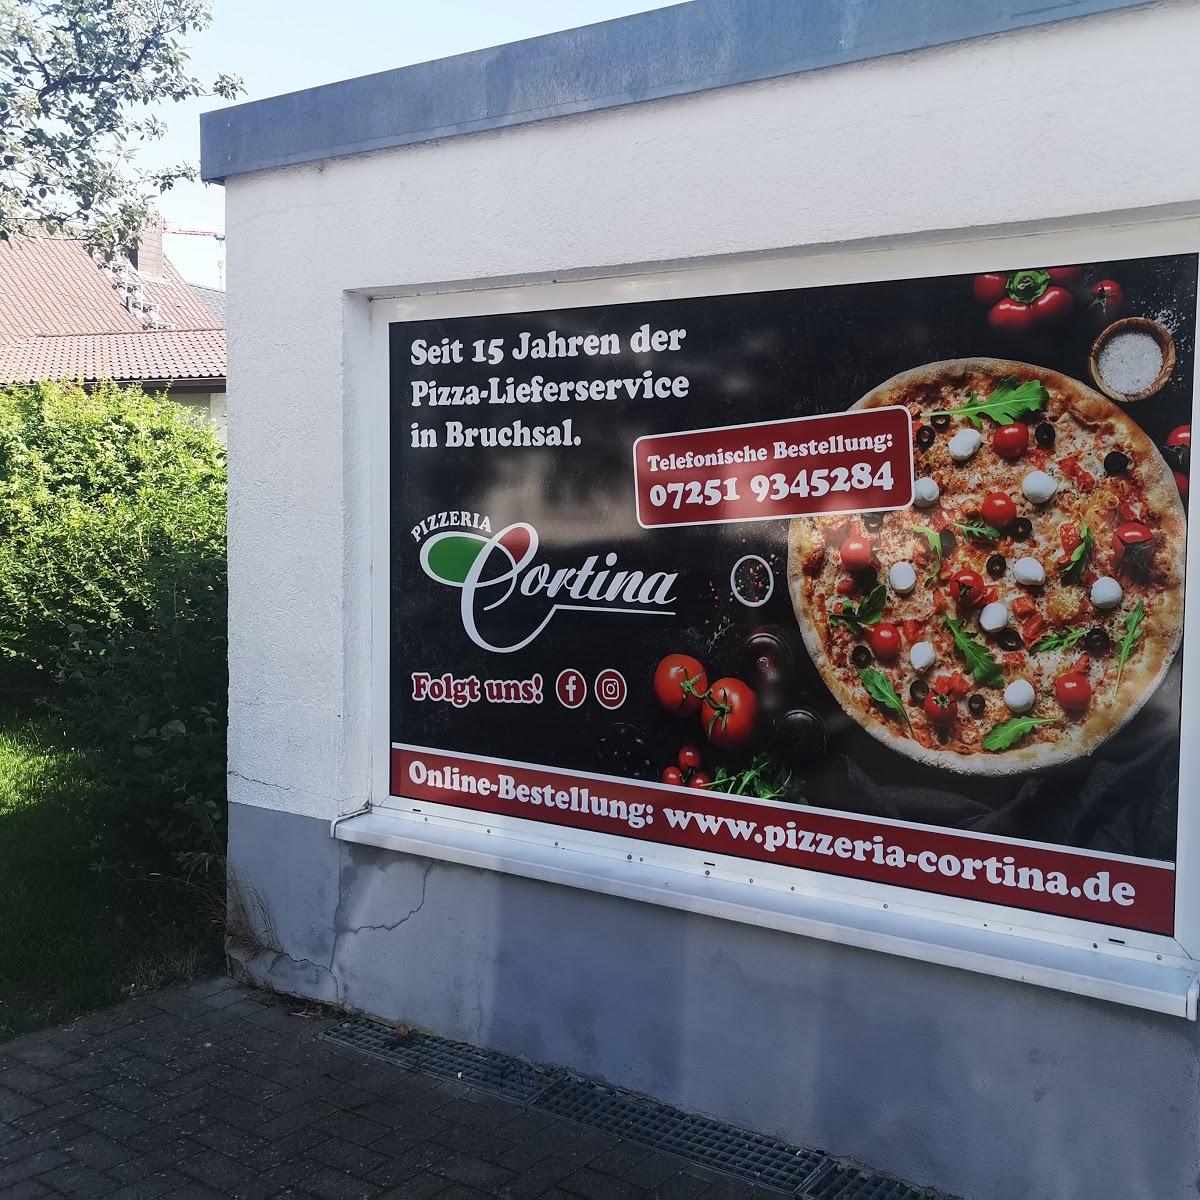 Restaurant "Pizzeria Cortina" in Bruchsal